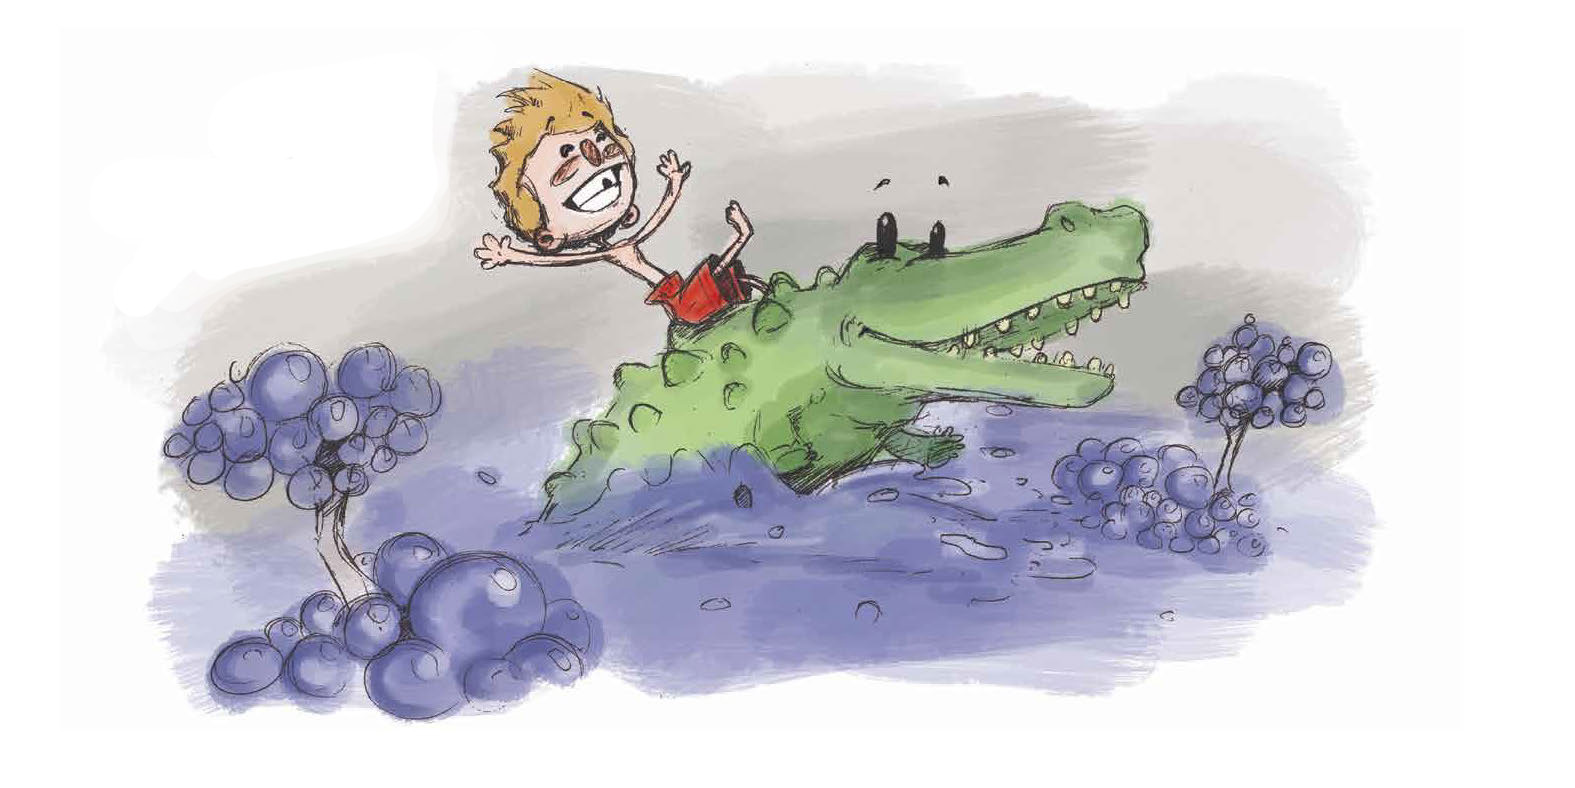 Jack gleefully rides on the back of a crocodile.